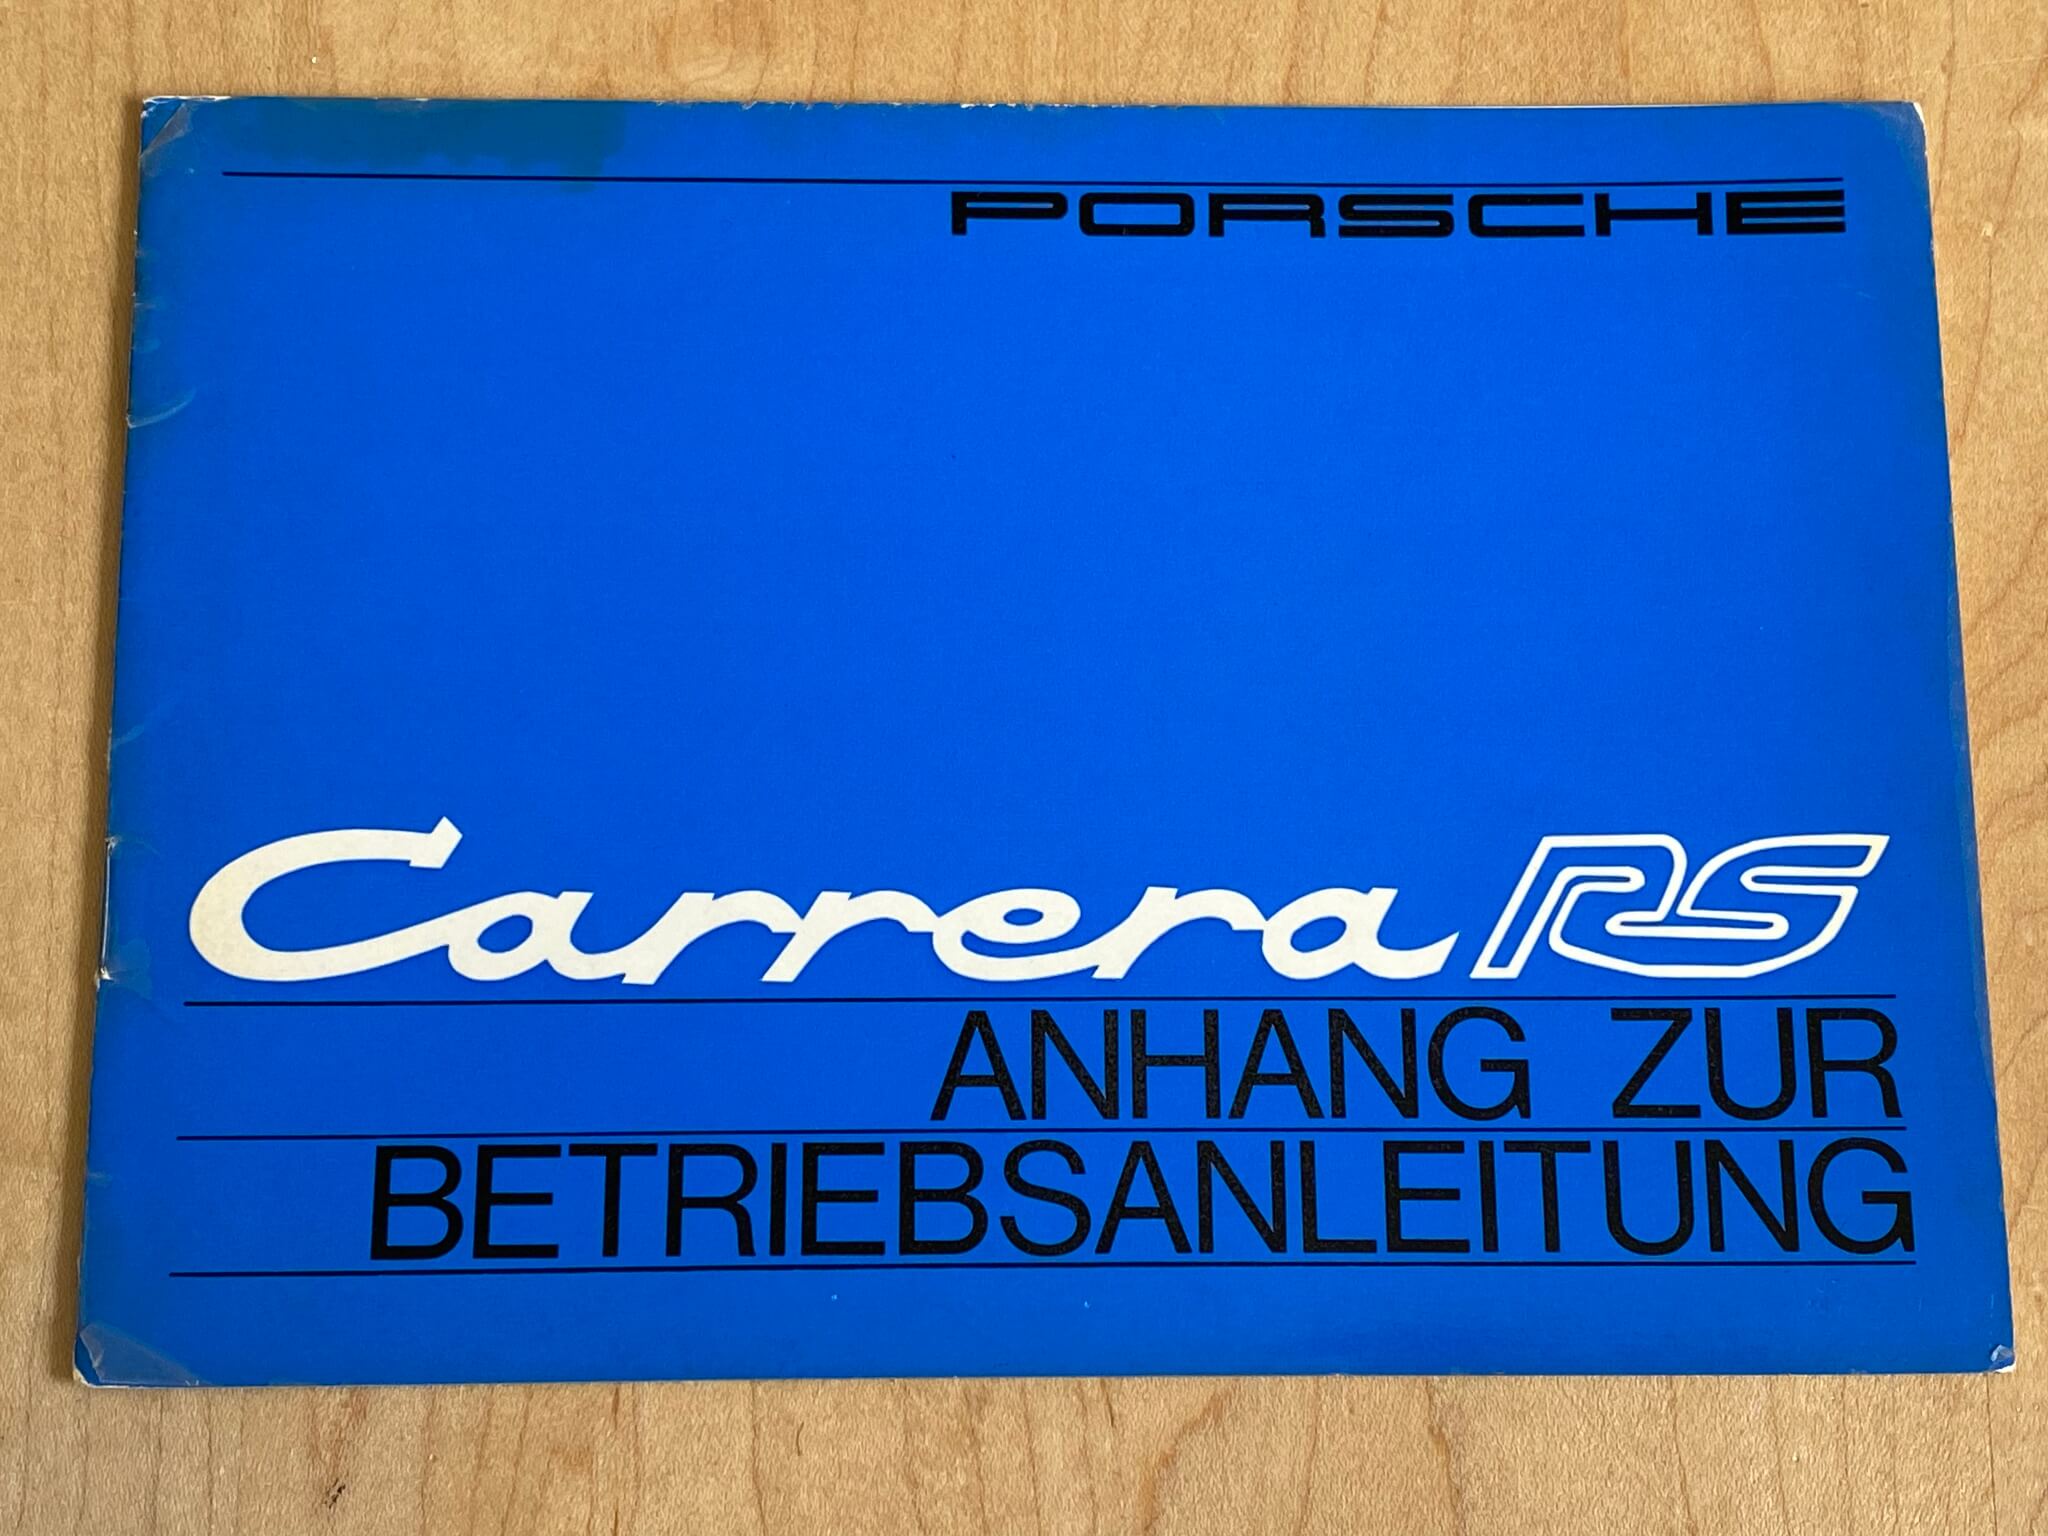 Original Porsche Carrera RS Supplement